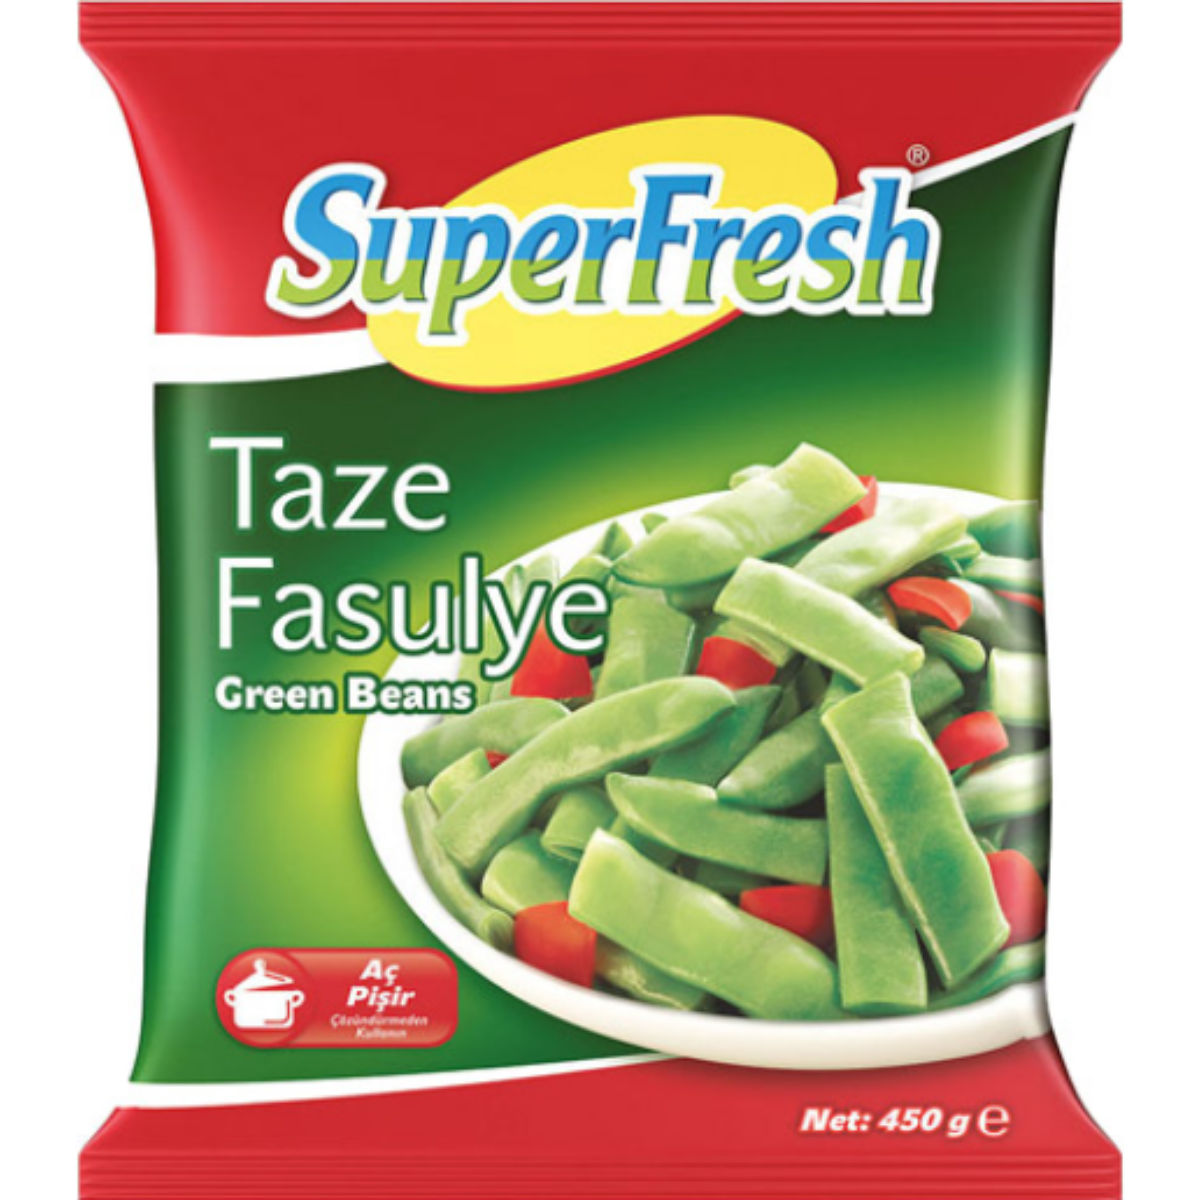 SUPERFRESH TAZE FASULYE 450 G